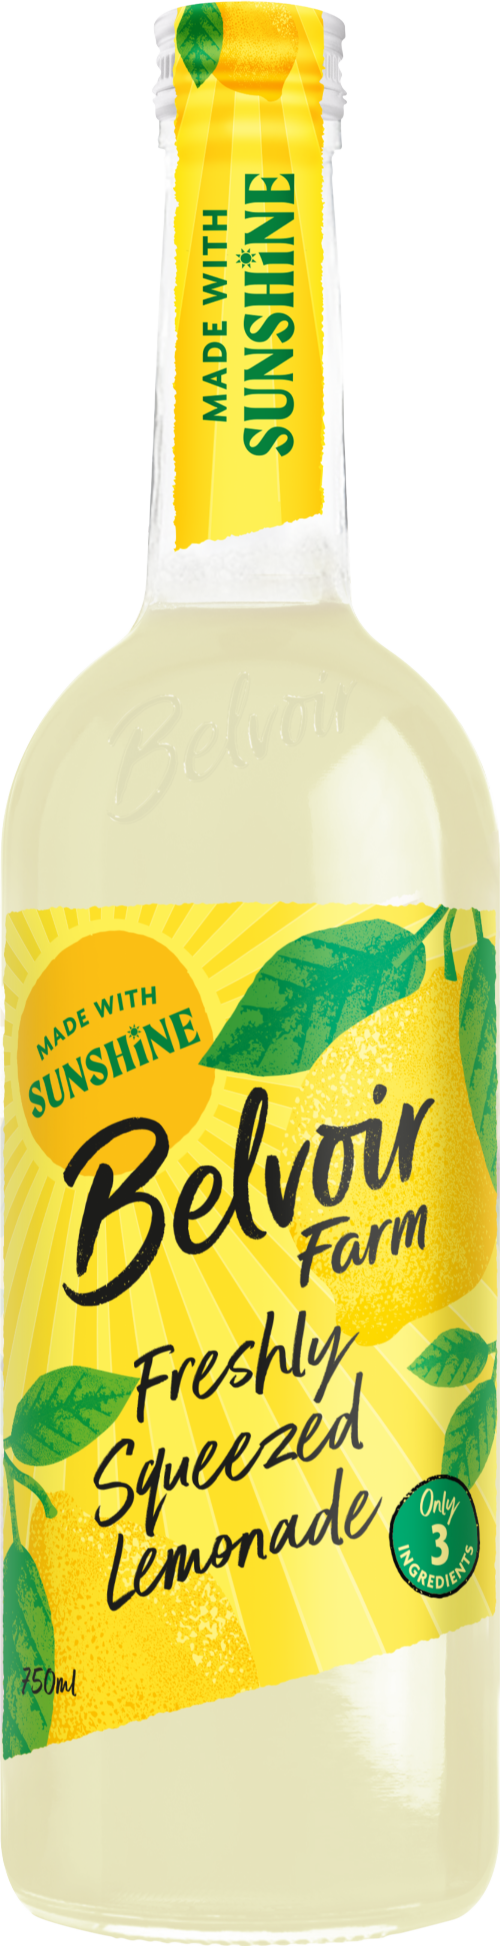 BELVOIR Freshly Squeezed Lemonade 75cl